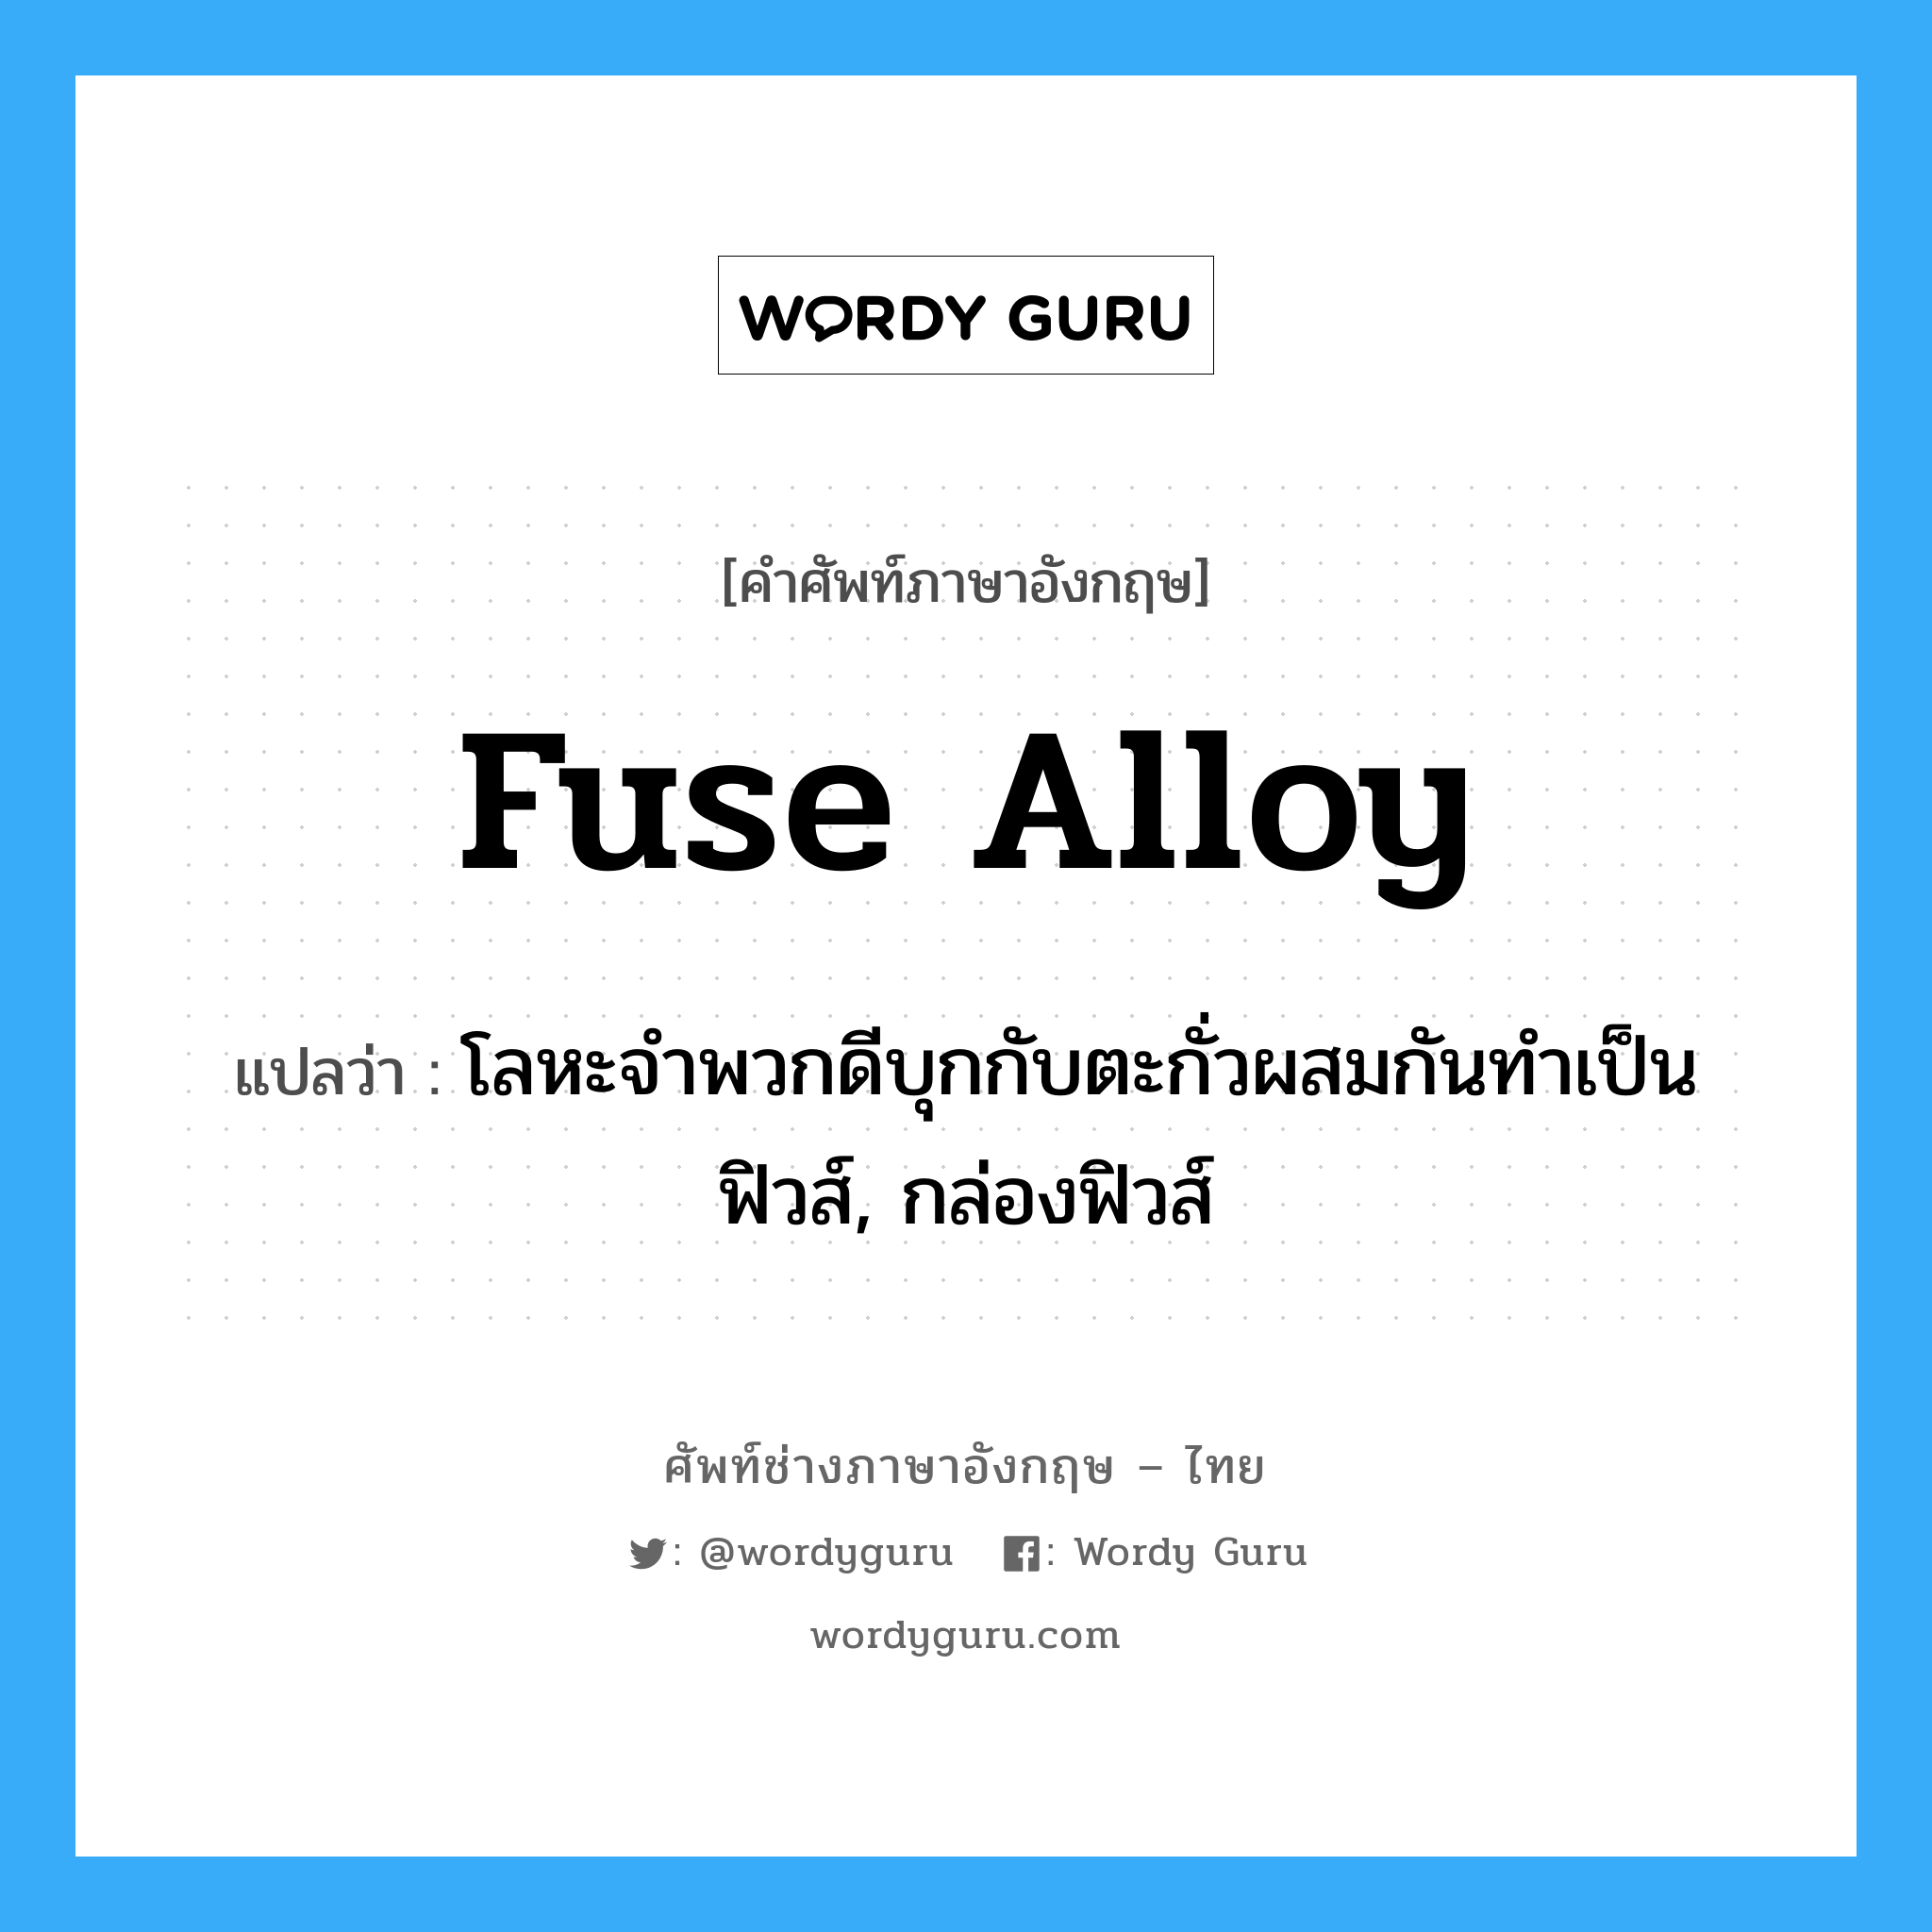 fuse alloy แปลว่า?, คำศัพท์ช่างภาษาอังกฤษ - ไทย fuse alloy คำศัพท์ภาษาอังกฤษ fuse alloy แปลว่า โลหะจำพวกดีบุกกับตะกั่วผสมกันทำเป็นฟิวส์, กล่องฟิวส์